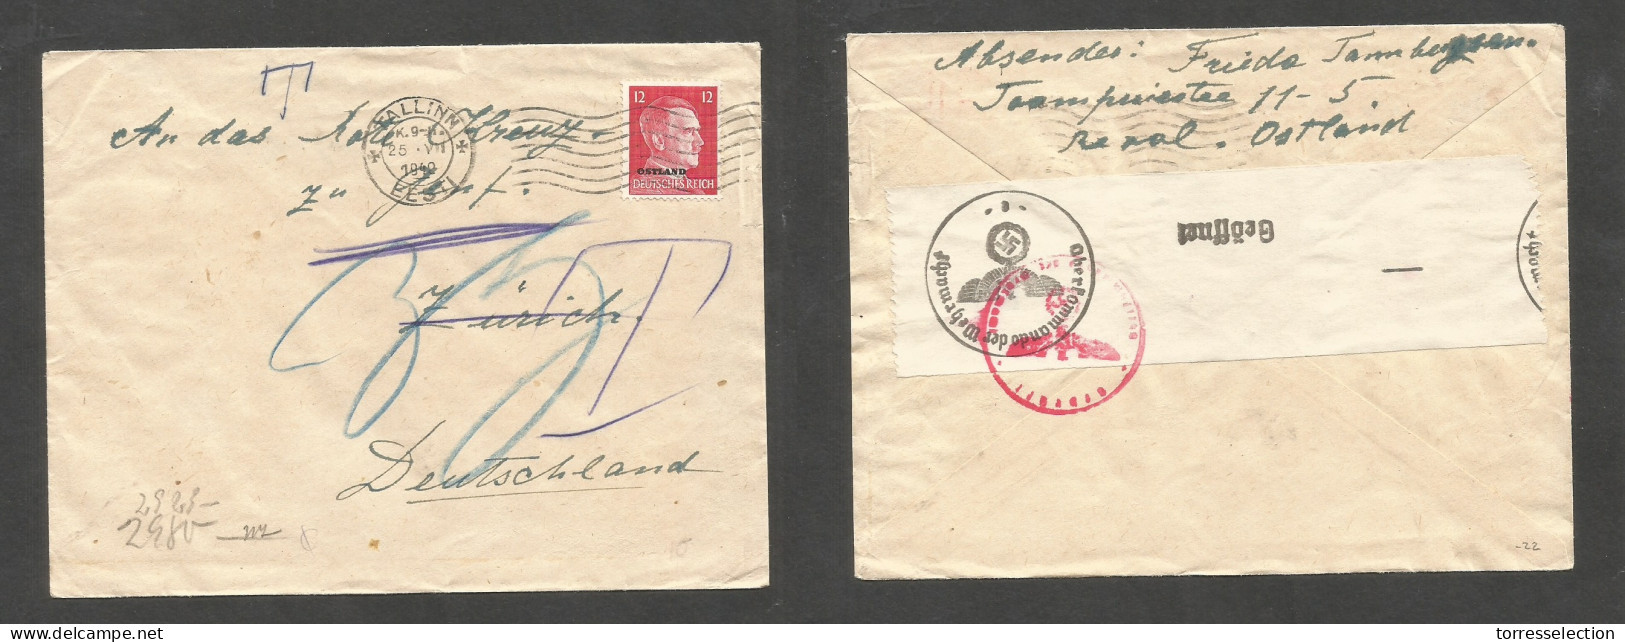 ESTONIA. 1940 (25 July) Nazi Occup. Tallinn - Switzerland, Zurich. Comercial Single Fkd Hitler Ovptd 12p Envelope Rollin - Estland